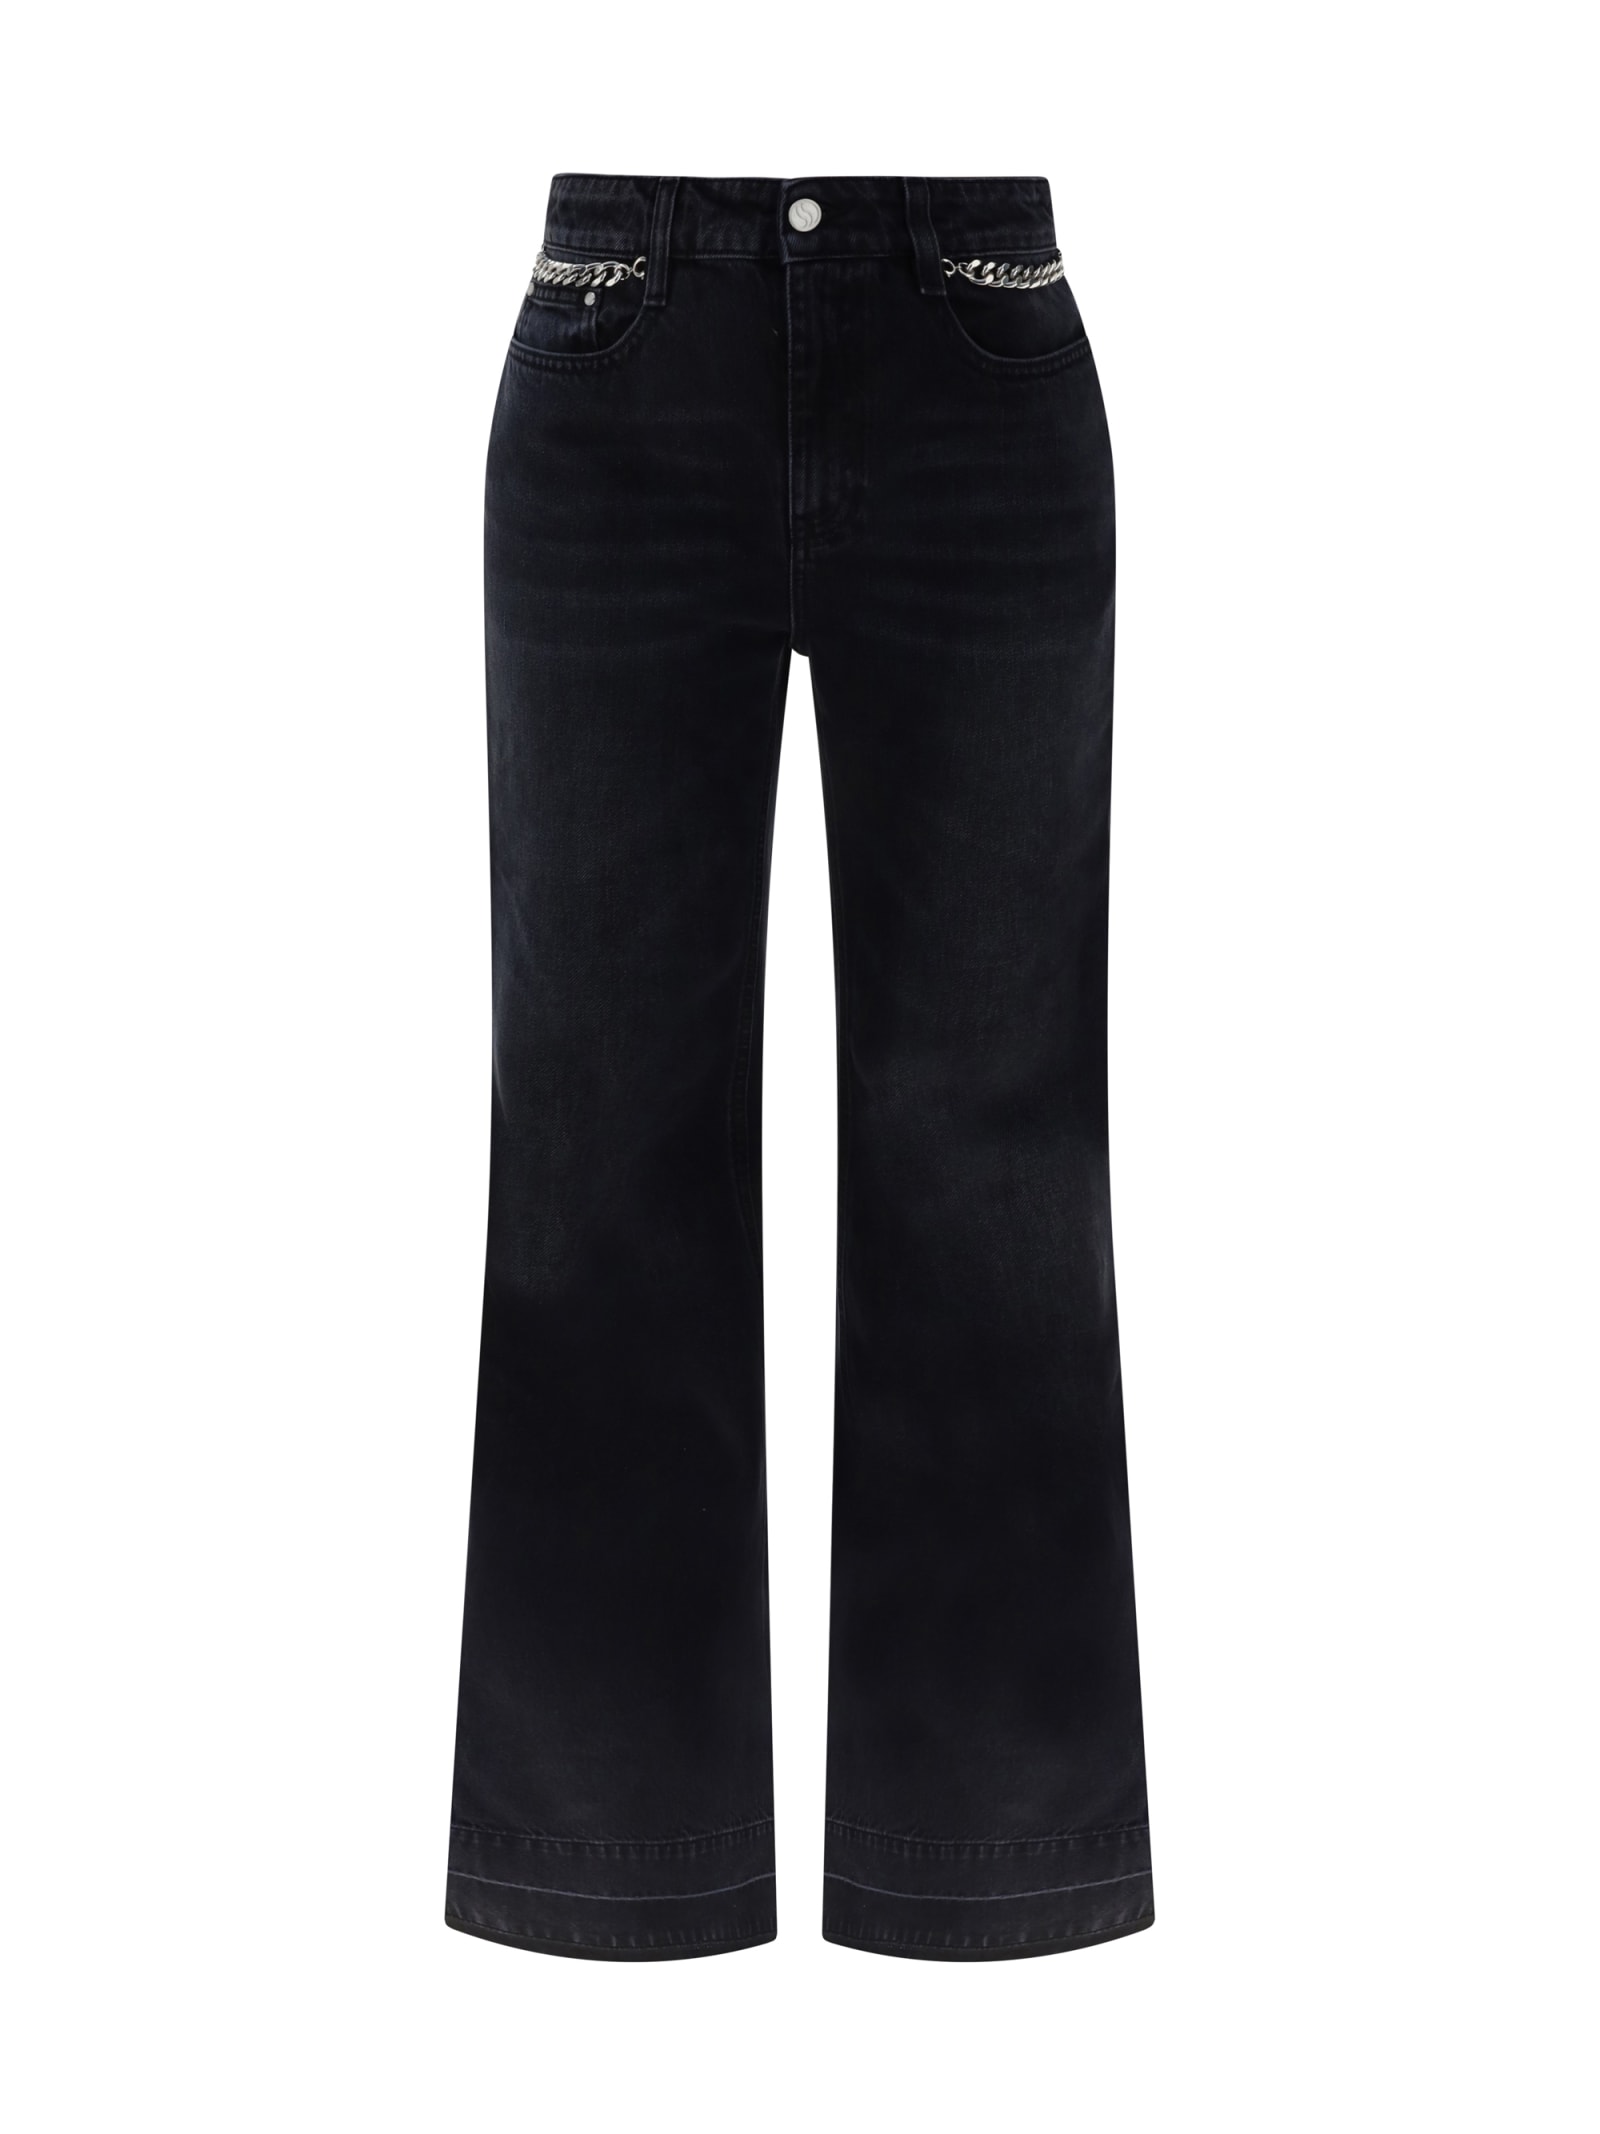 Stella McCartney Falabella 70s Jeans